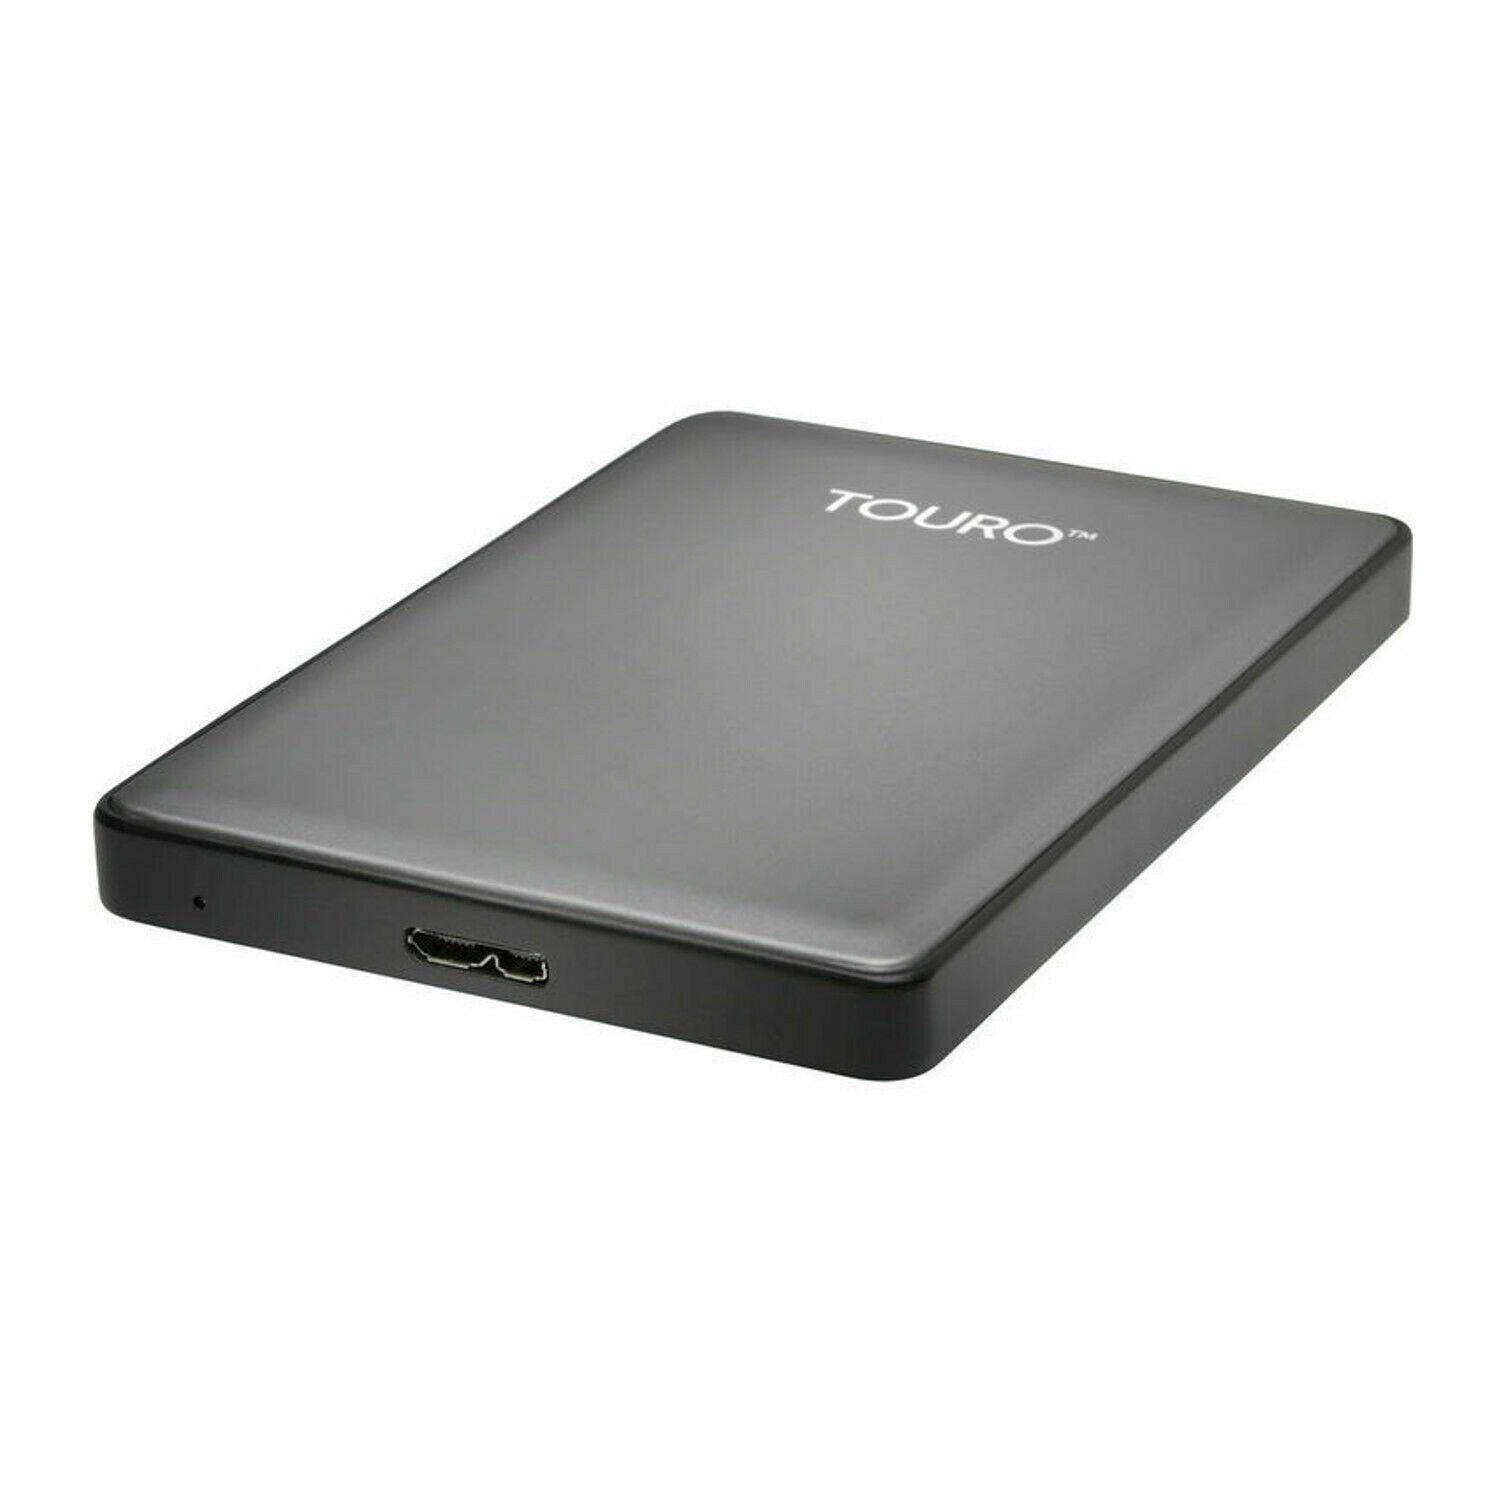 Touro S Portable External Hard Drive 500GB USB 3.0 for PC, Mac, Laptop - 0S03698